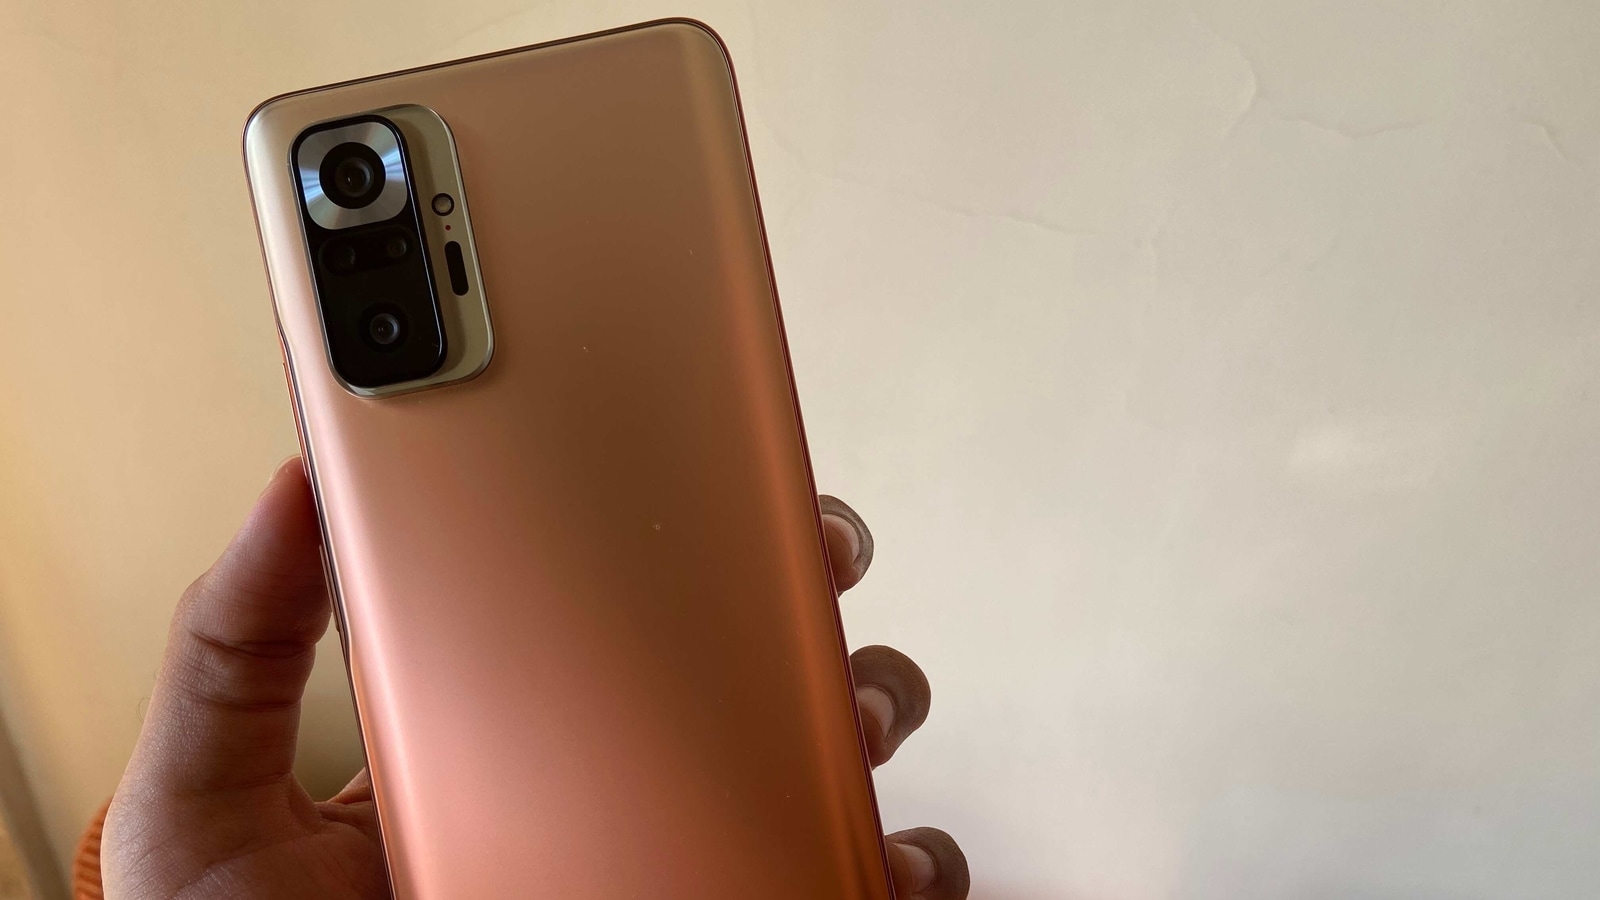 Xiaomi Mi 10 Review - Redefining Mi as a Premium Smartphone Brand